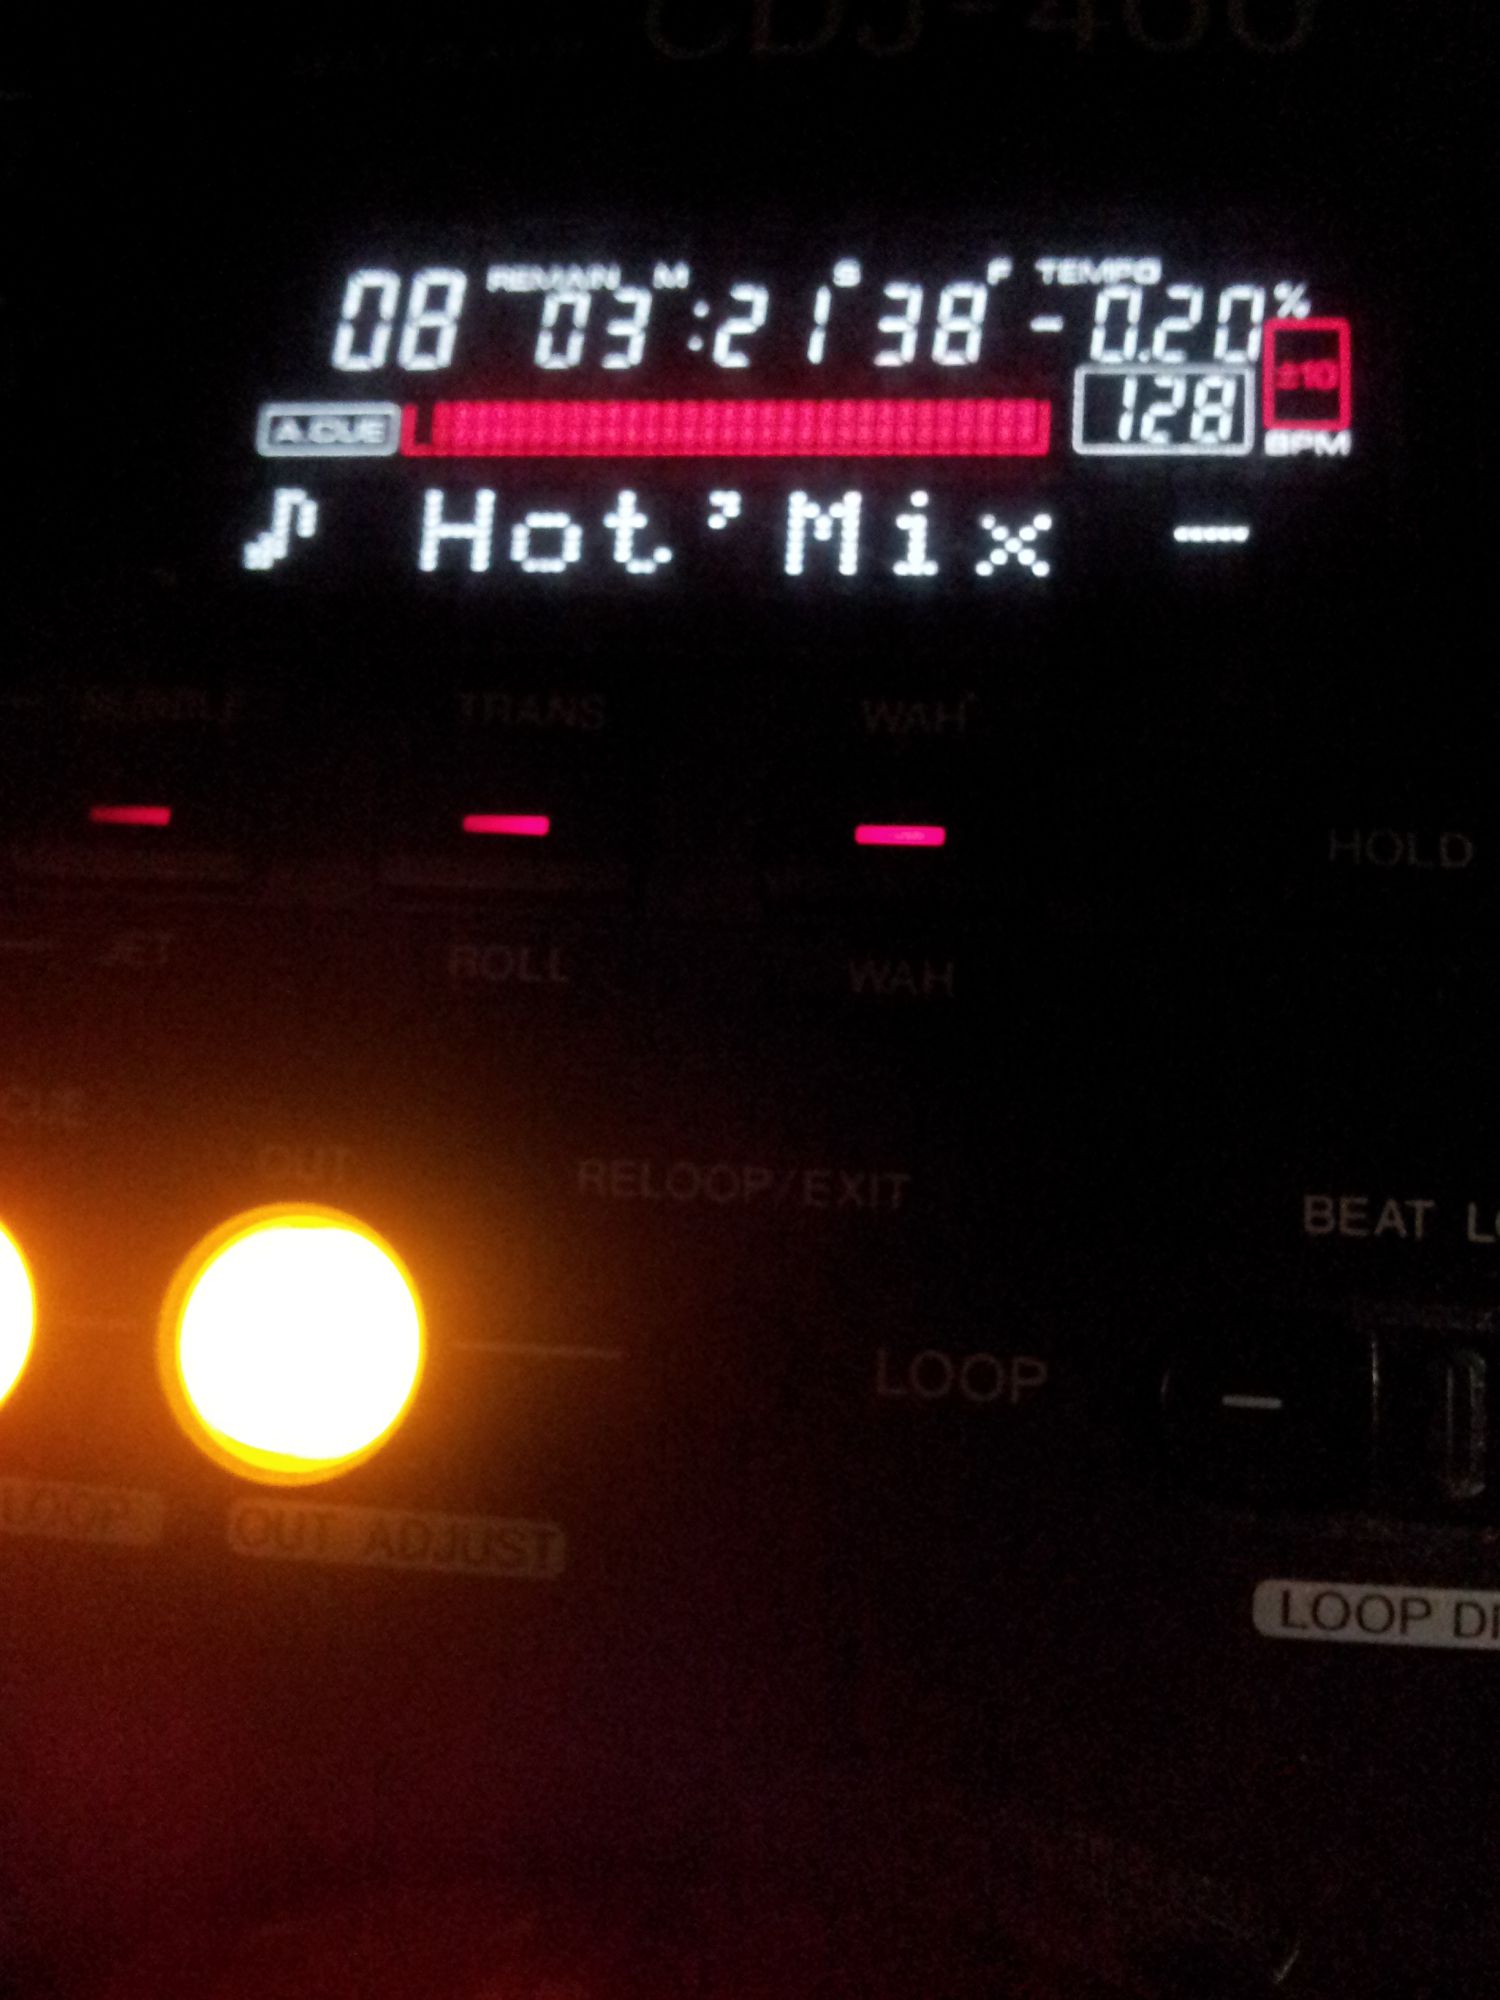 Hot'Mix